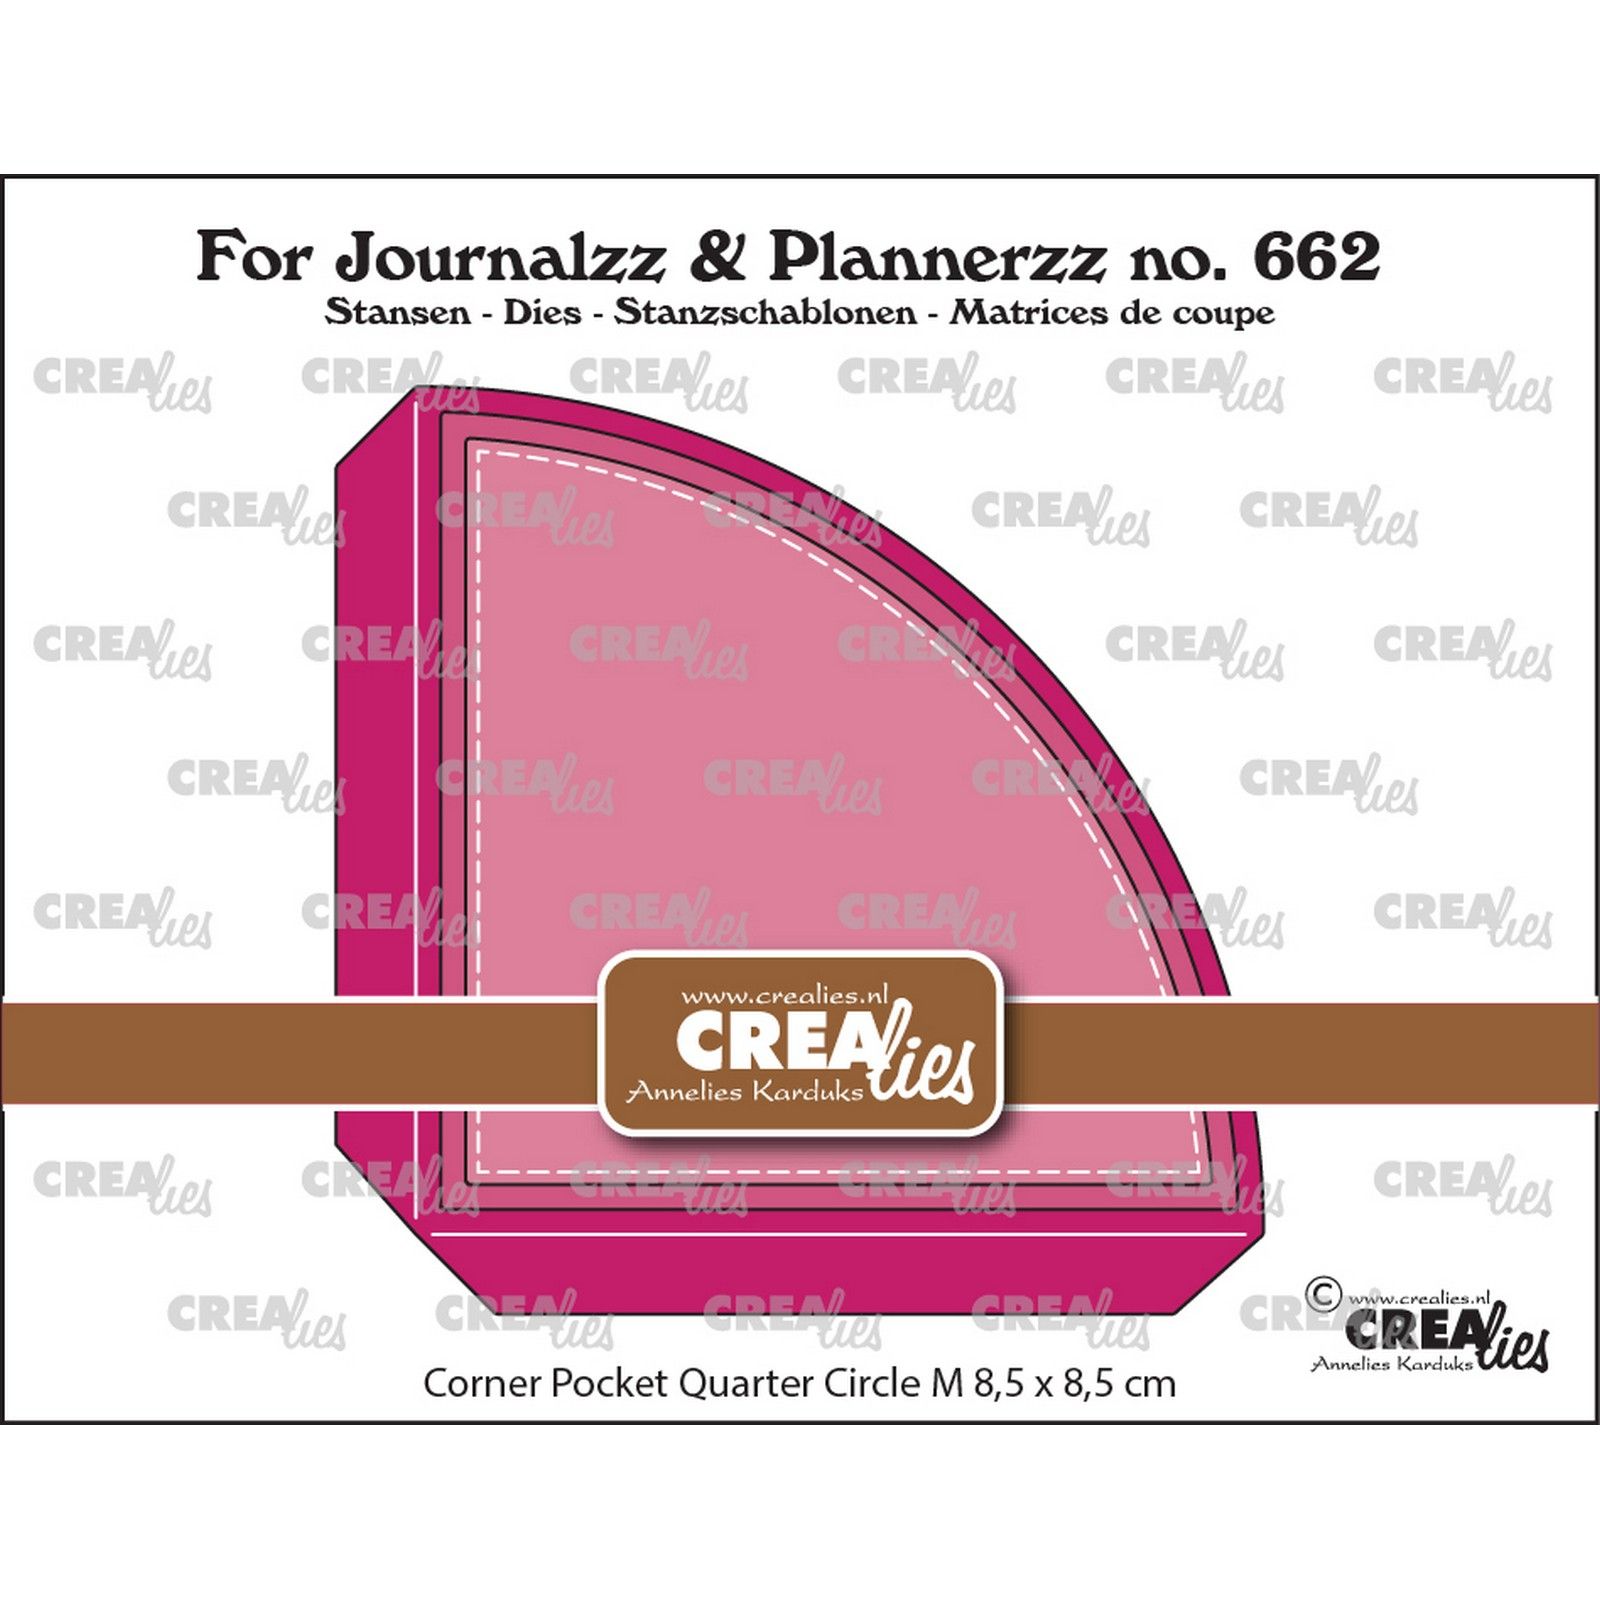 Crealies • For Journalzz & Plannerzz Corner Pocket Quarter Circle Medium 8,5cm